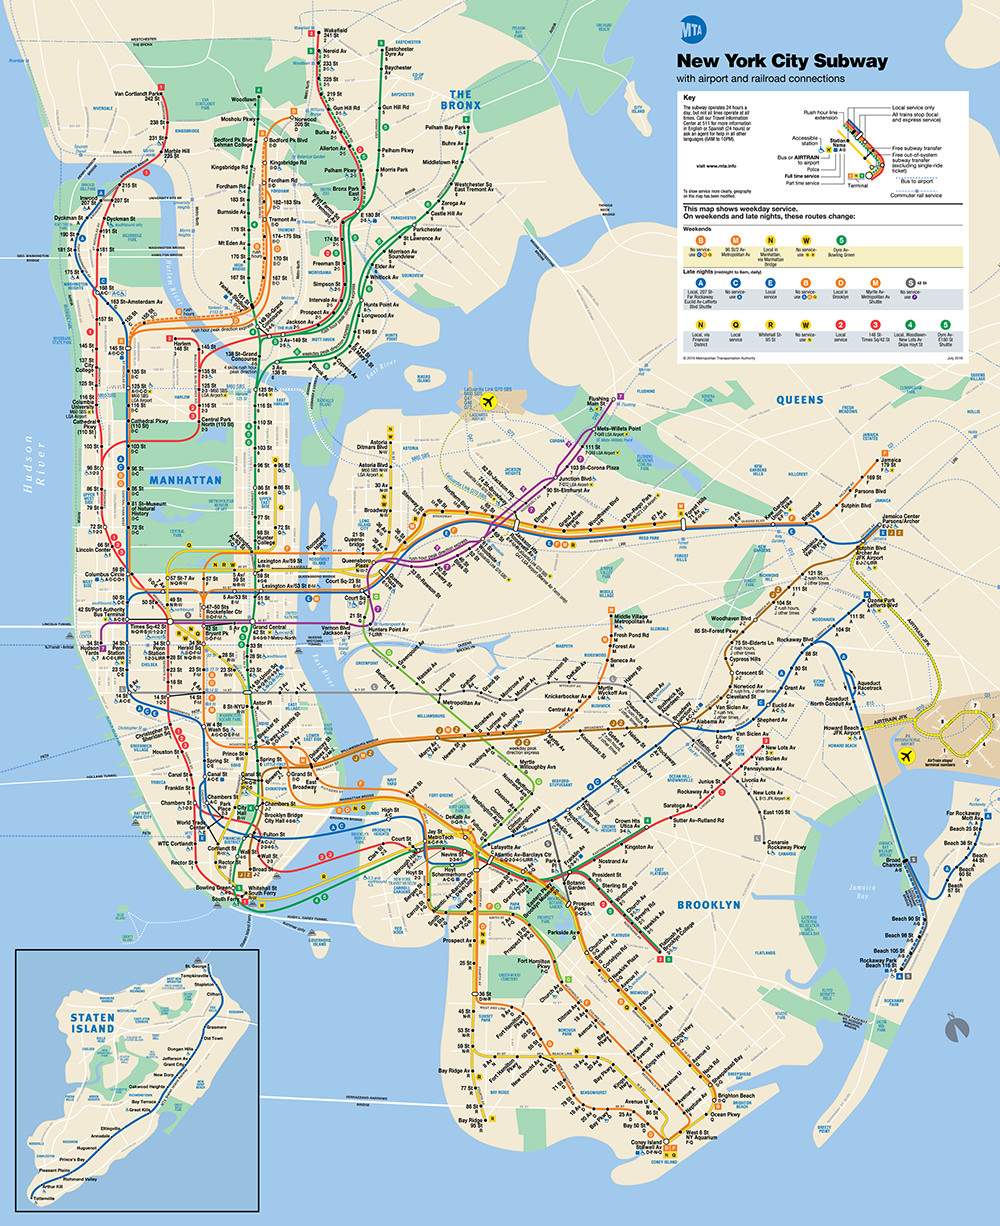 New York City subway map by Michael Hertz.